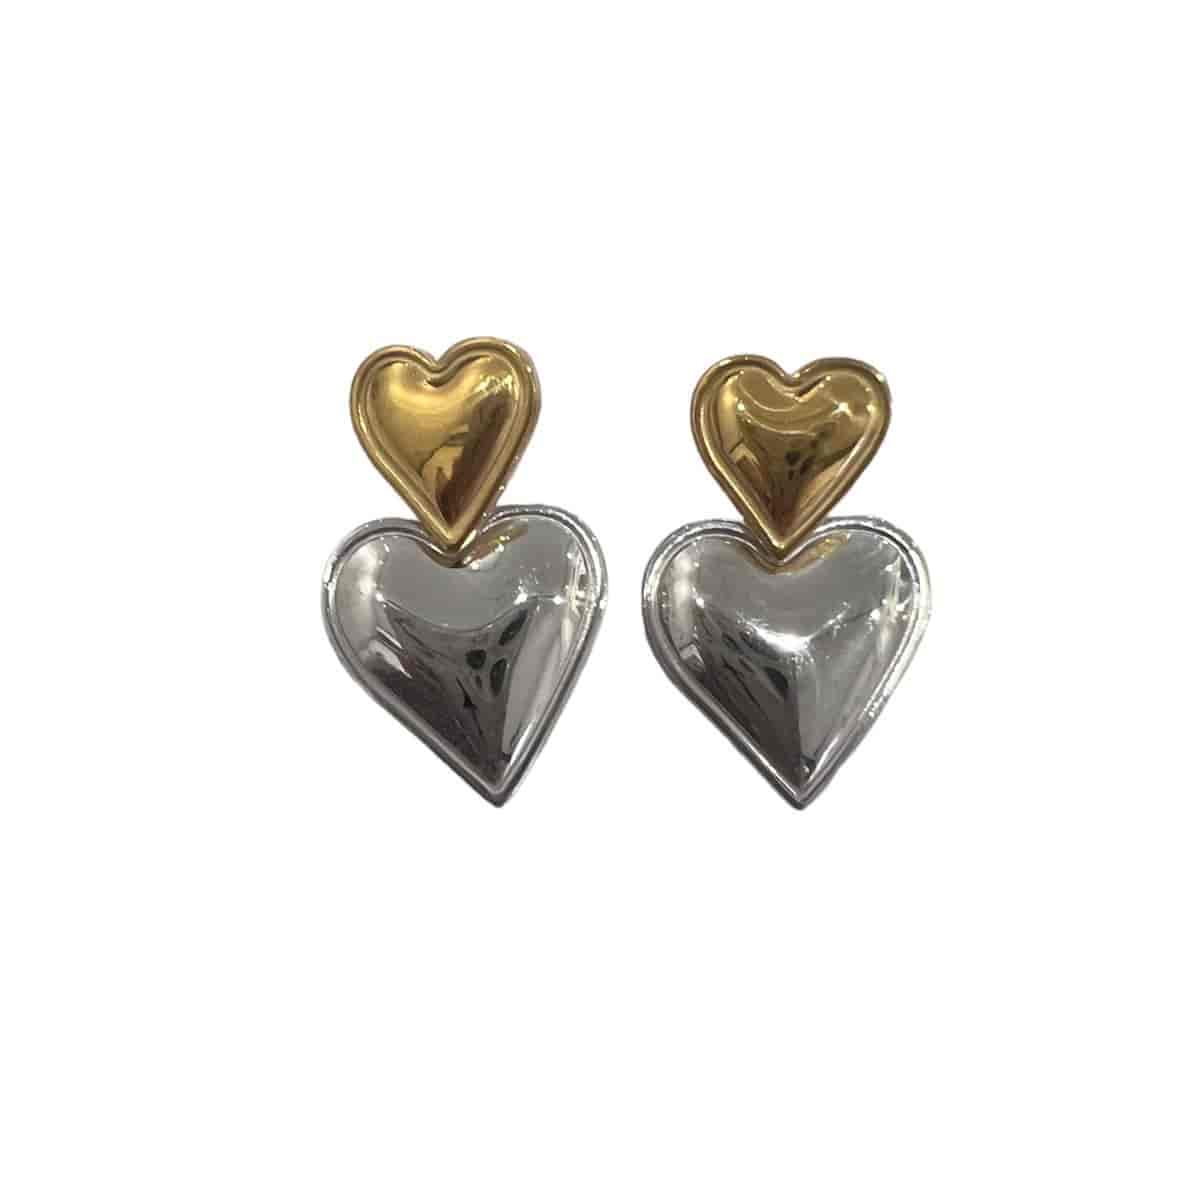 EHO1-1196 Σκουλαρίκια δίχρωμα ατσάλινα με μικρές και μεγάλες καρδιές χρυσό ασημί